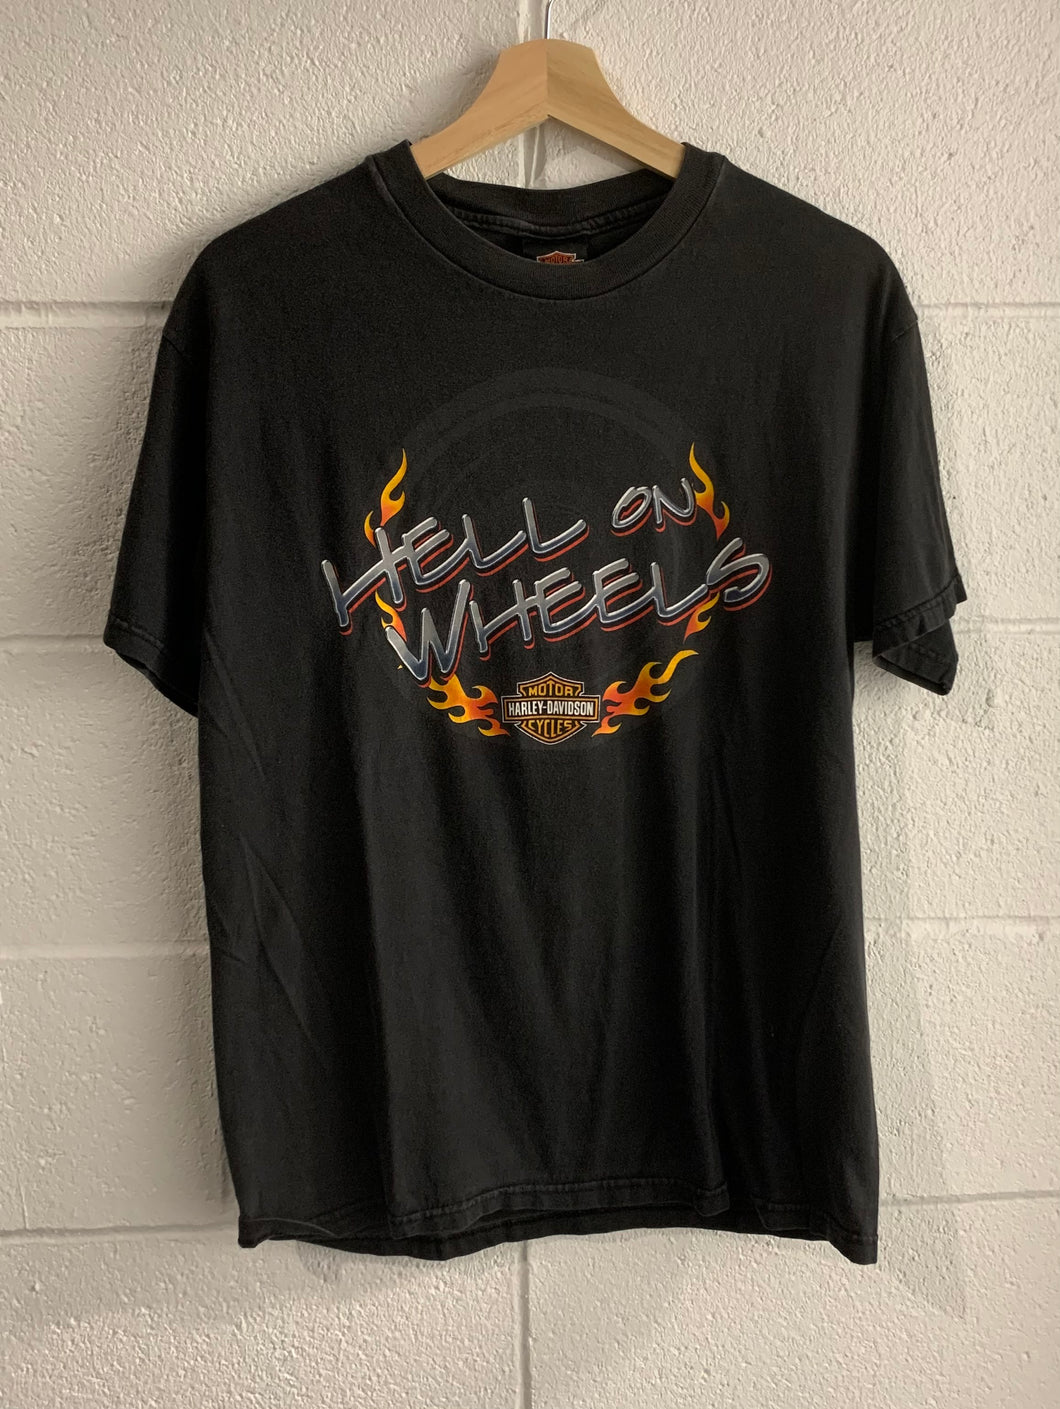 90s Harley Davidson Tee shirt